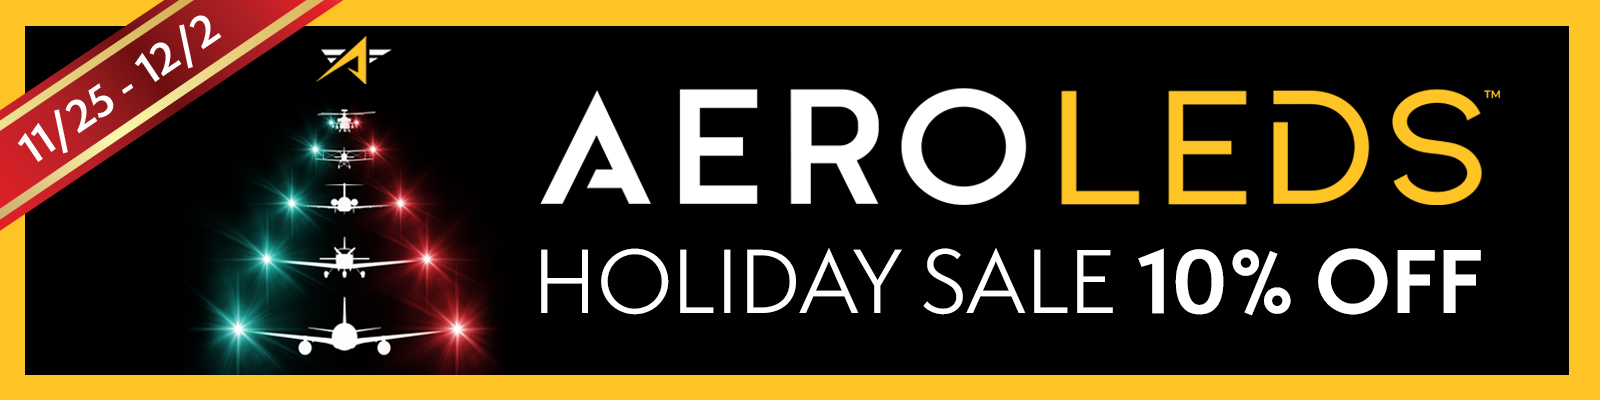 aeroleds discount